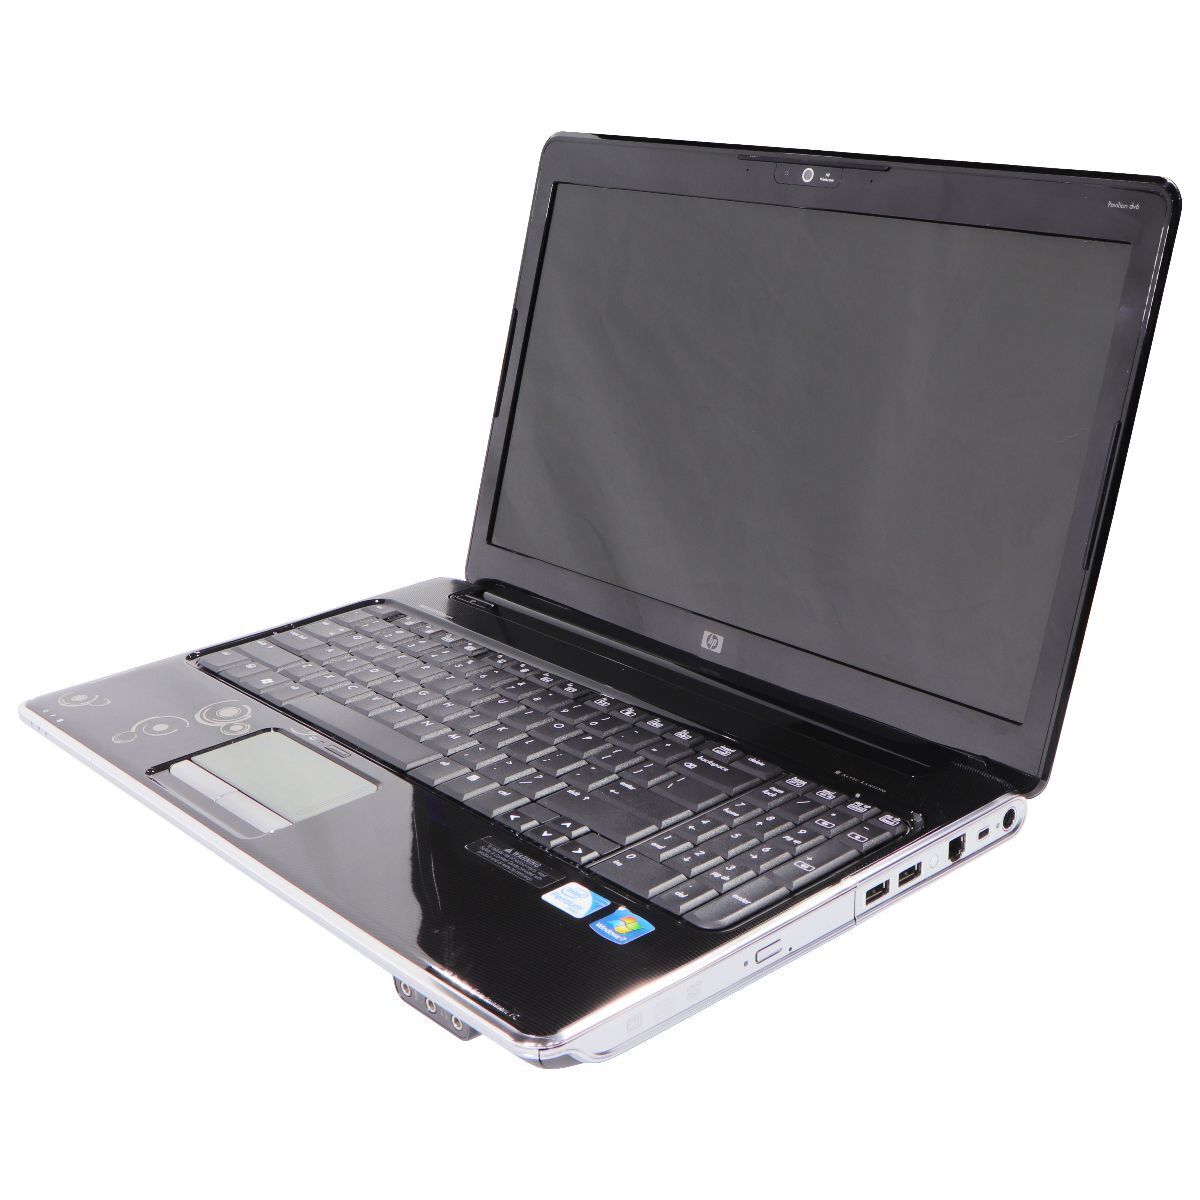 FAIR HP Pavilion (15.6-in) Laptop (DV6-1334US) Pentium T4300/250GB HDD/4GB/Home